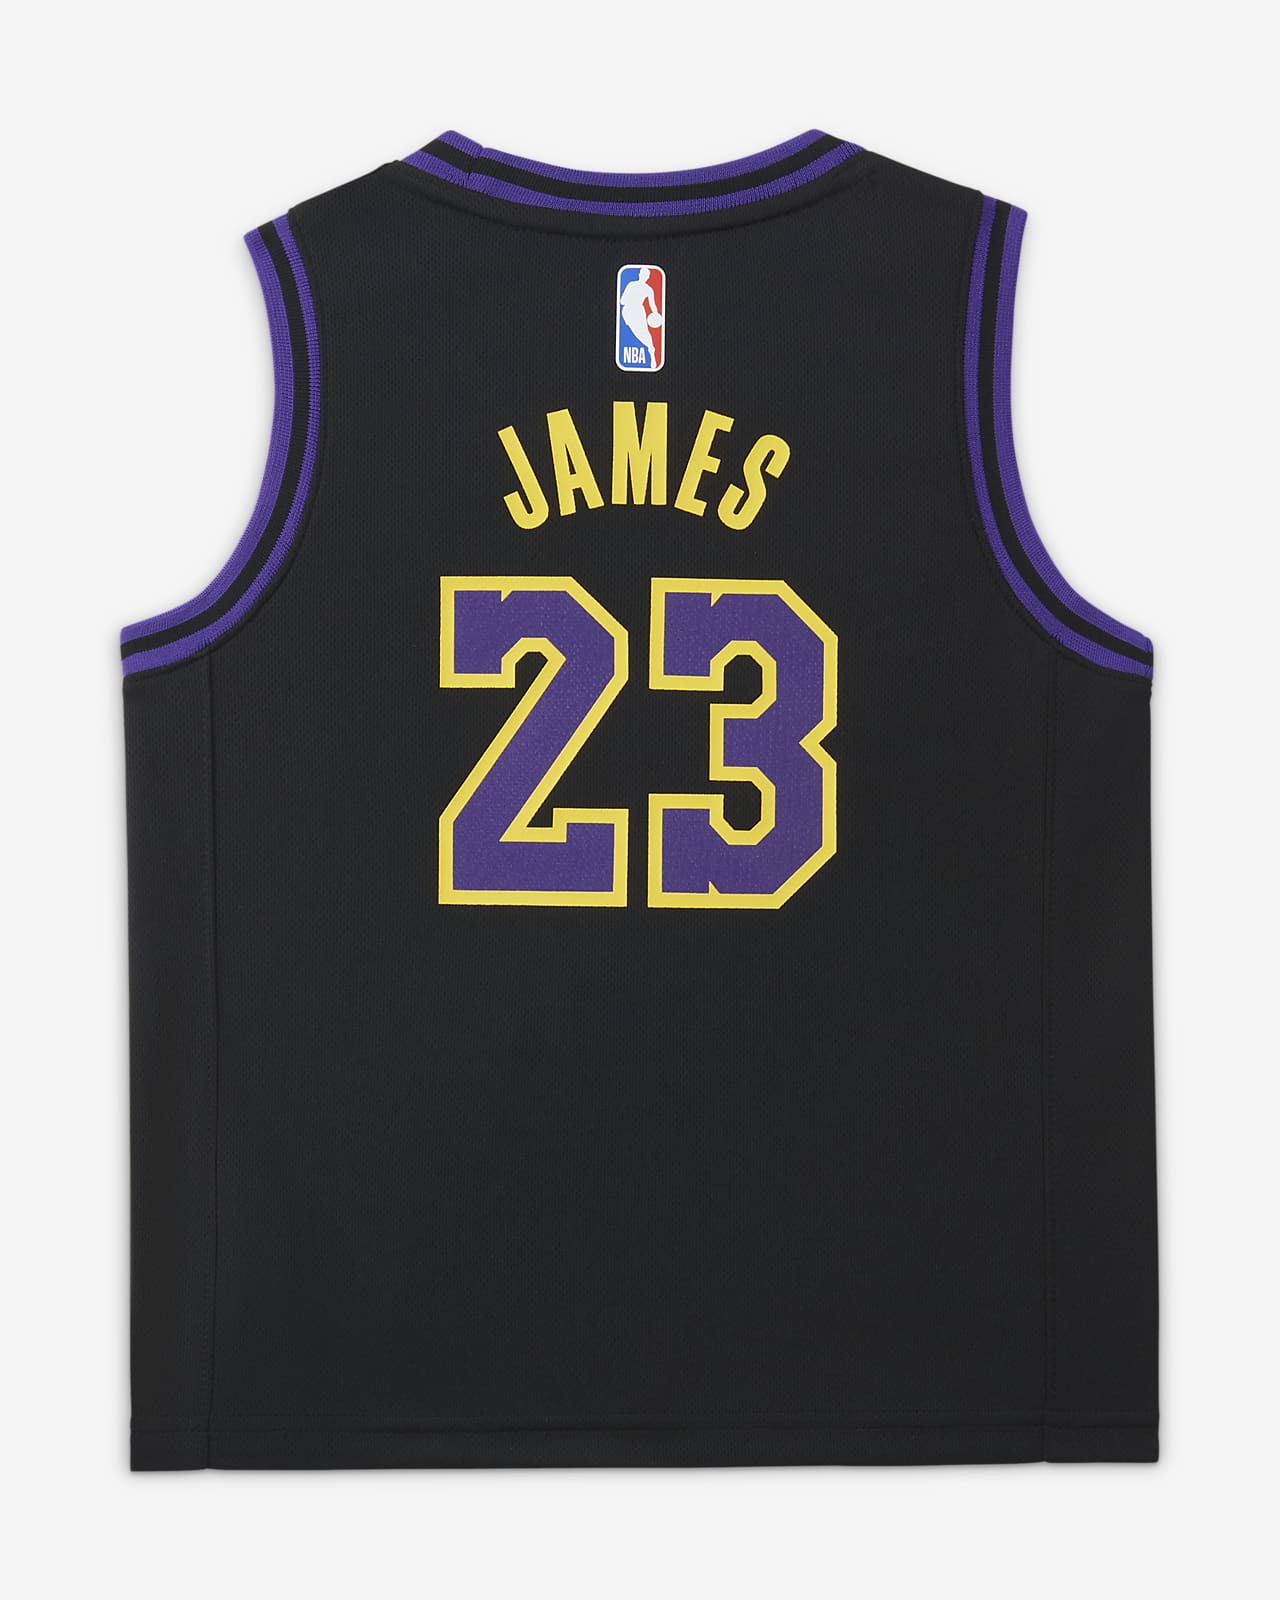 2023/24 赛季洛杉矶湖人队(LeBron James) City Edition Nike NBA 